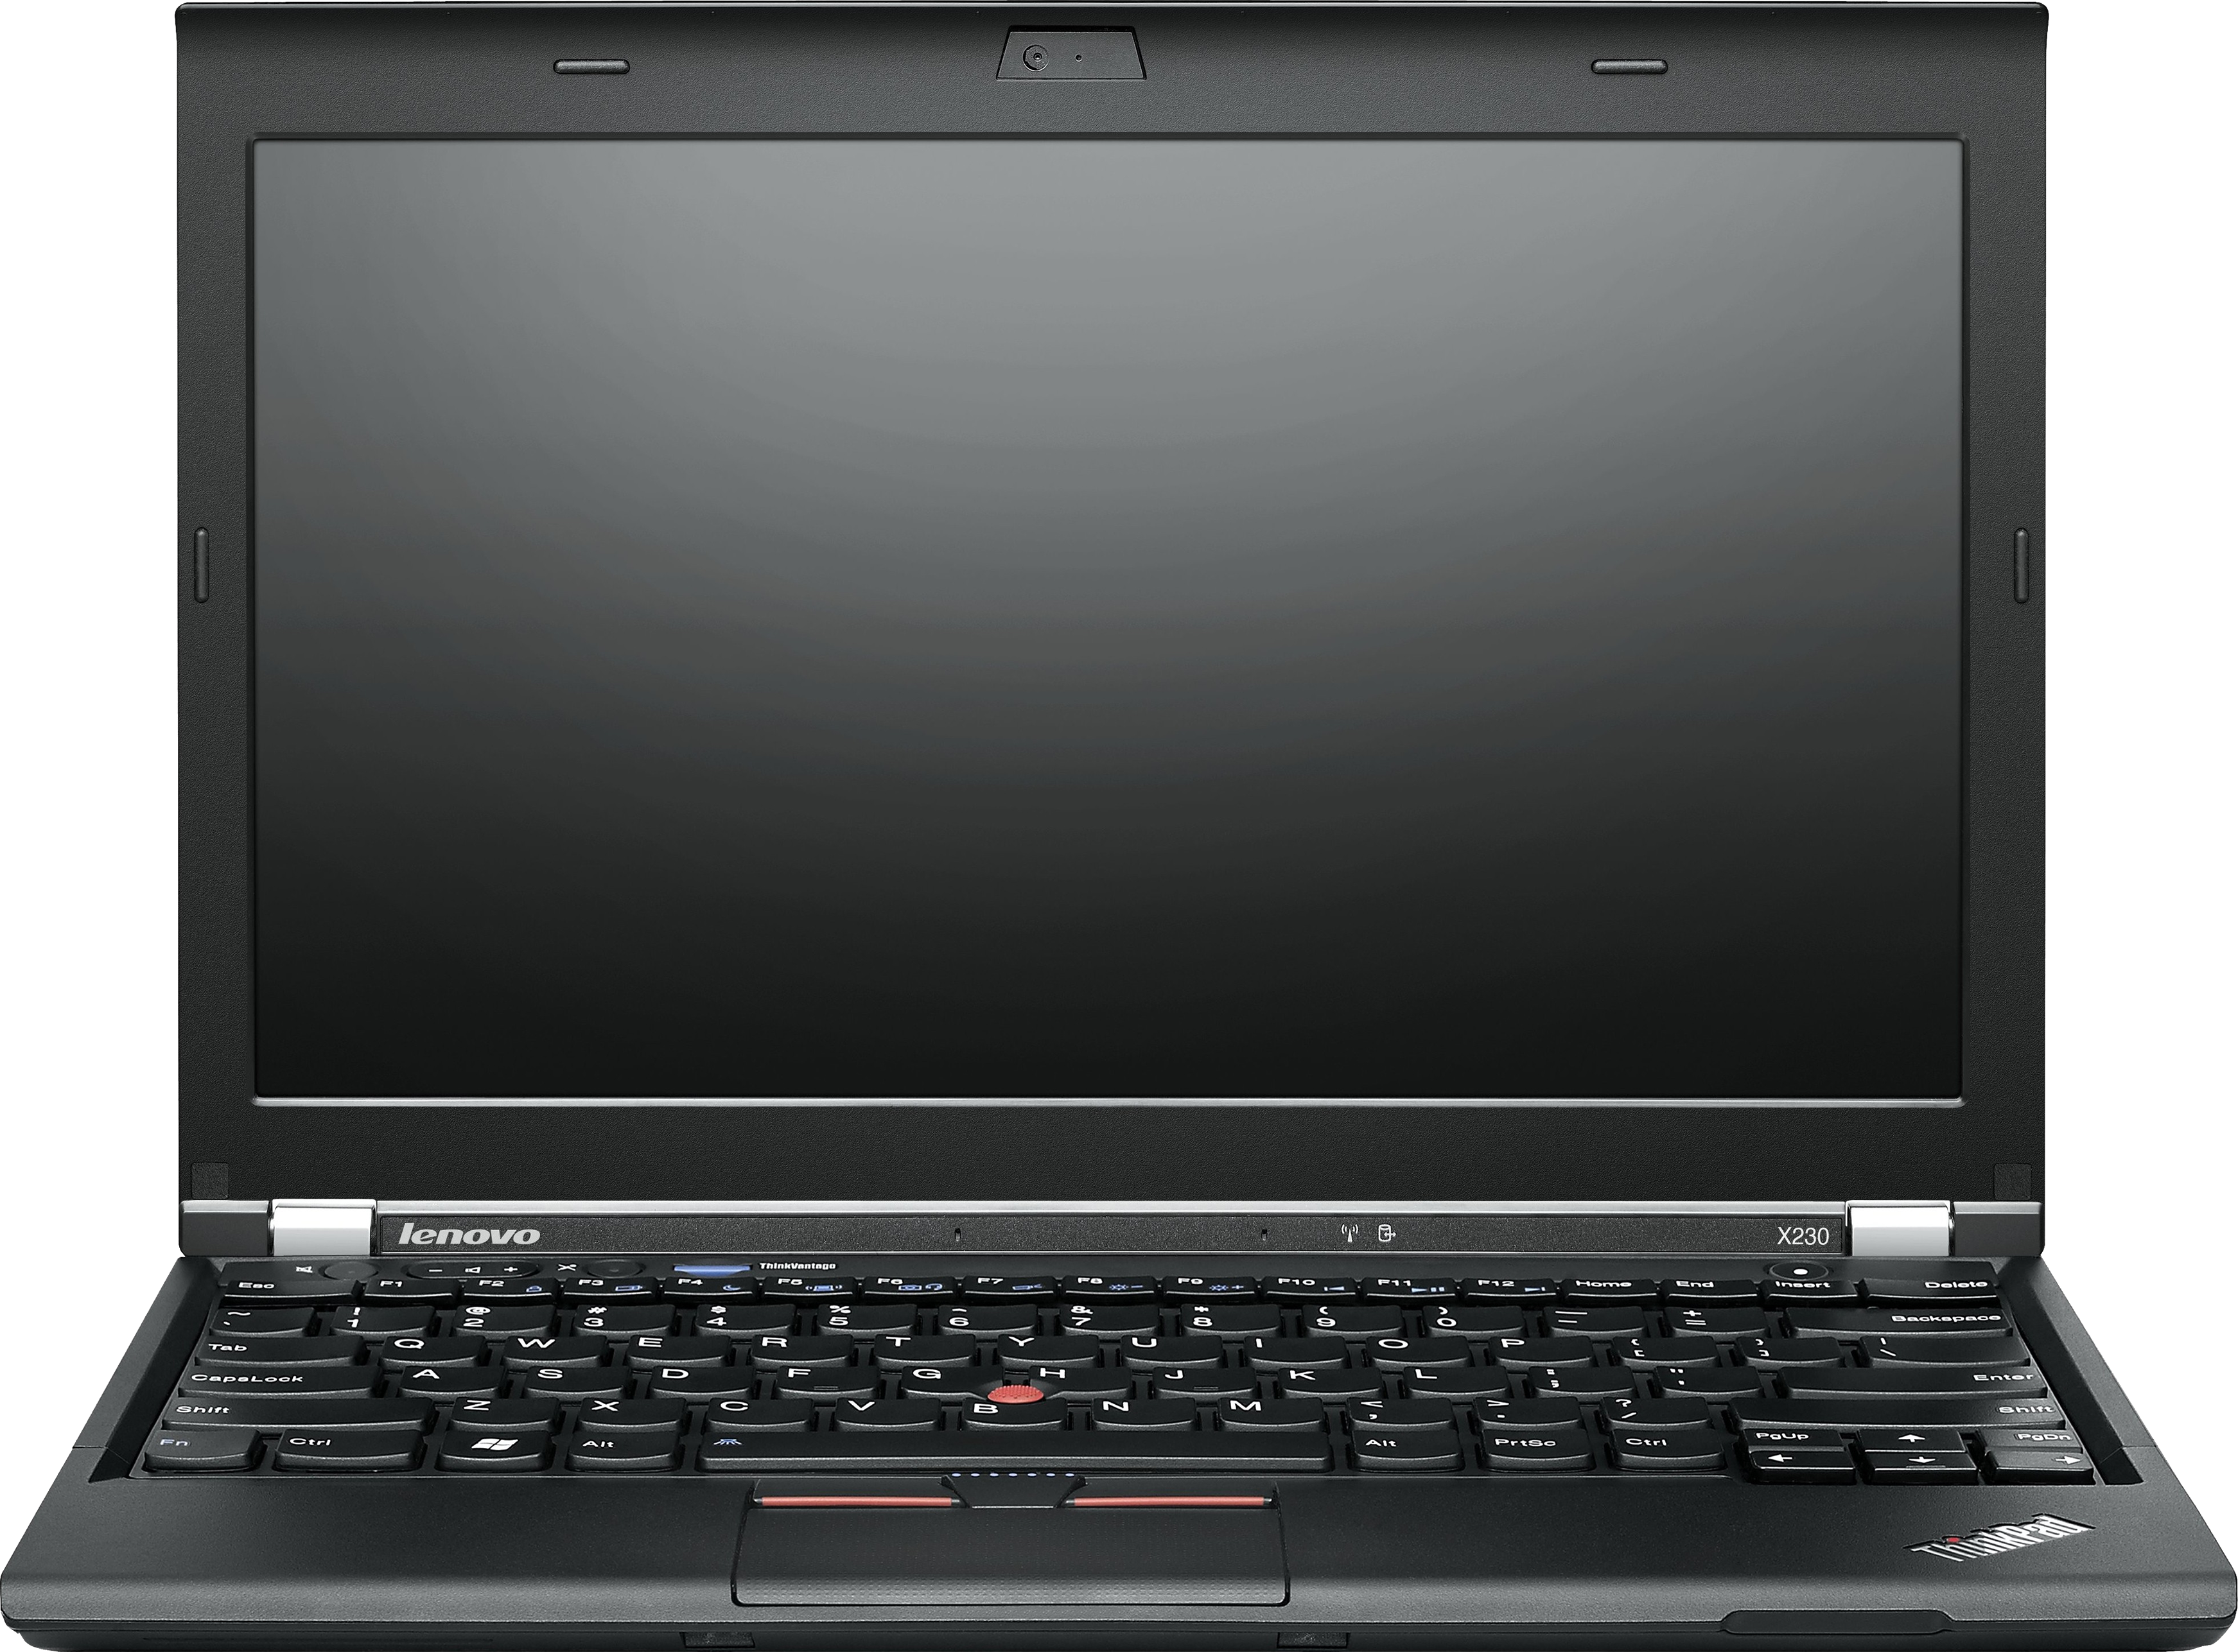 Laptops PNG images Download 